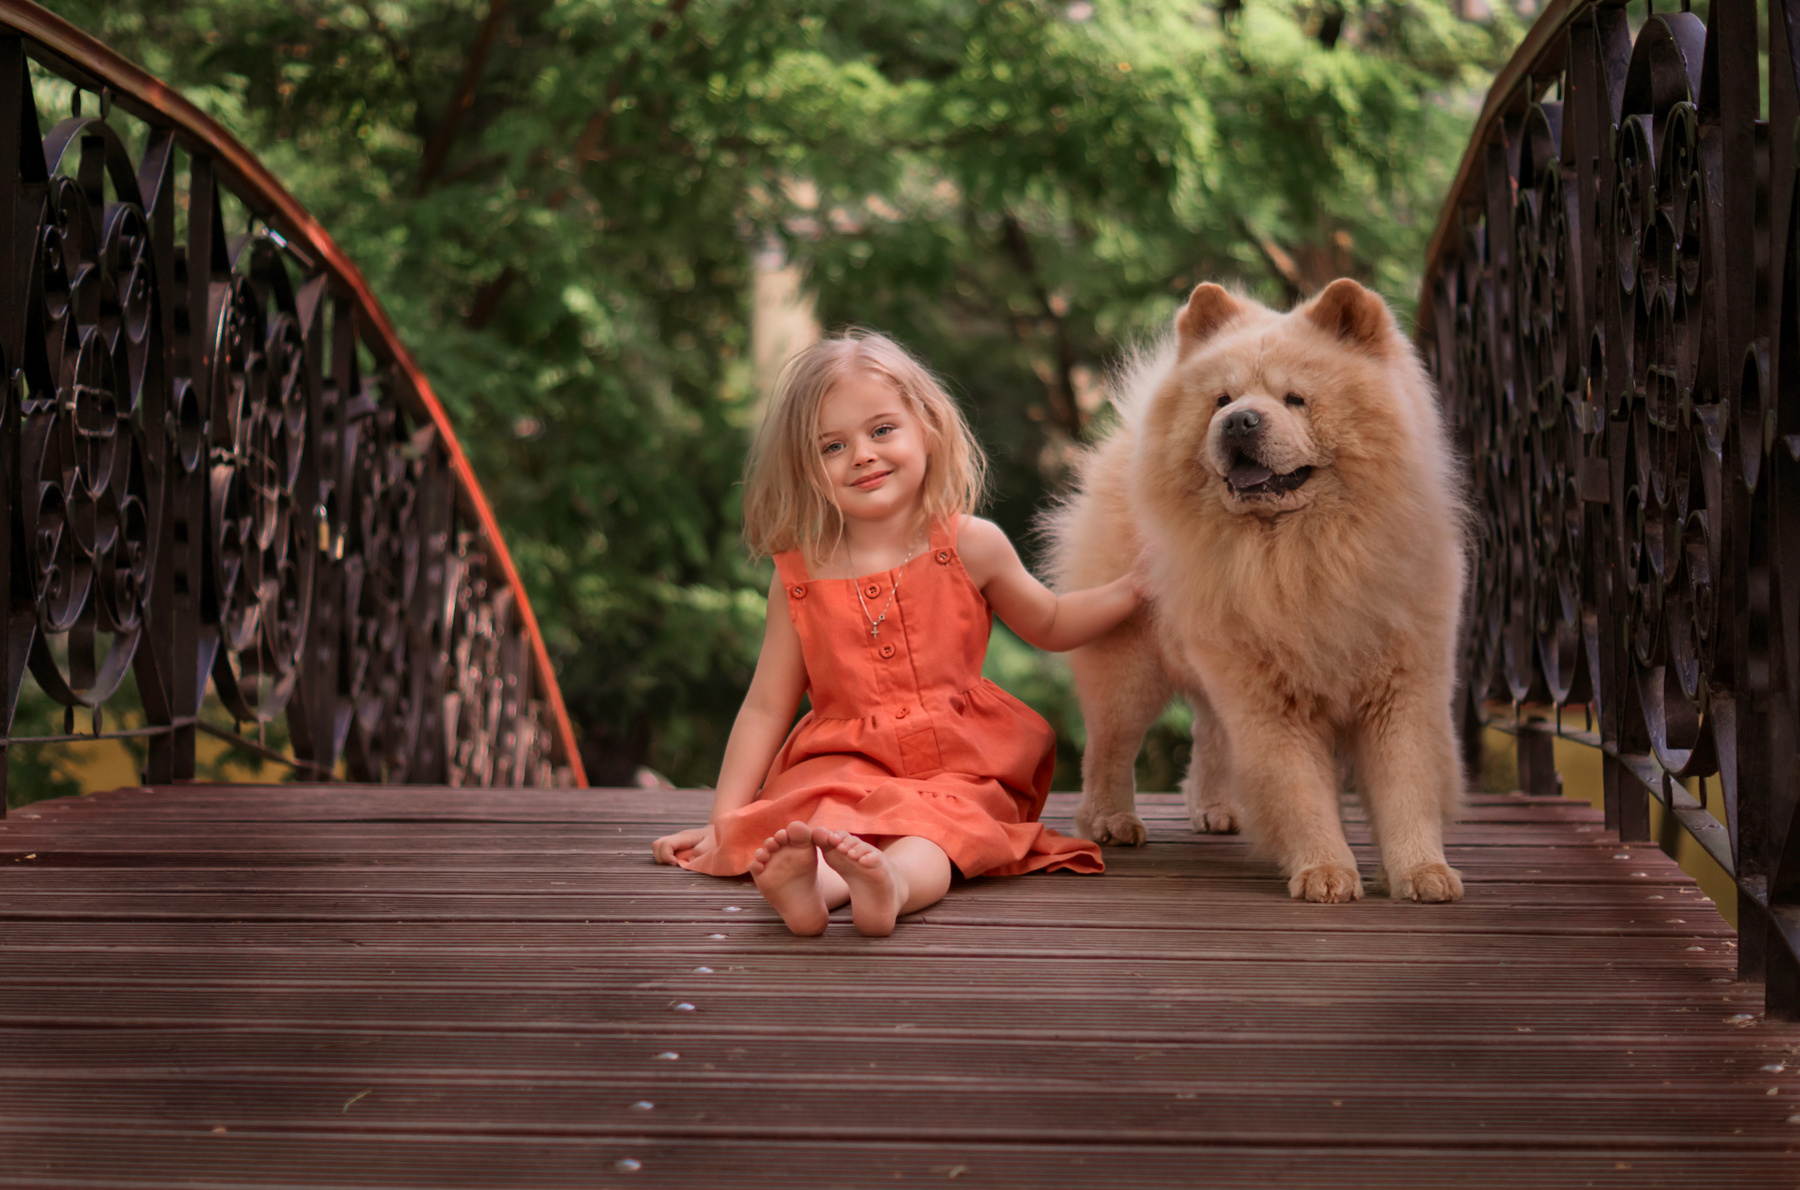 Аришка девочка портрет дети собака ребенок